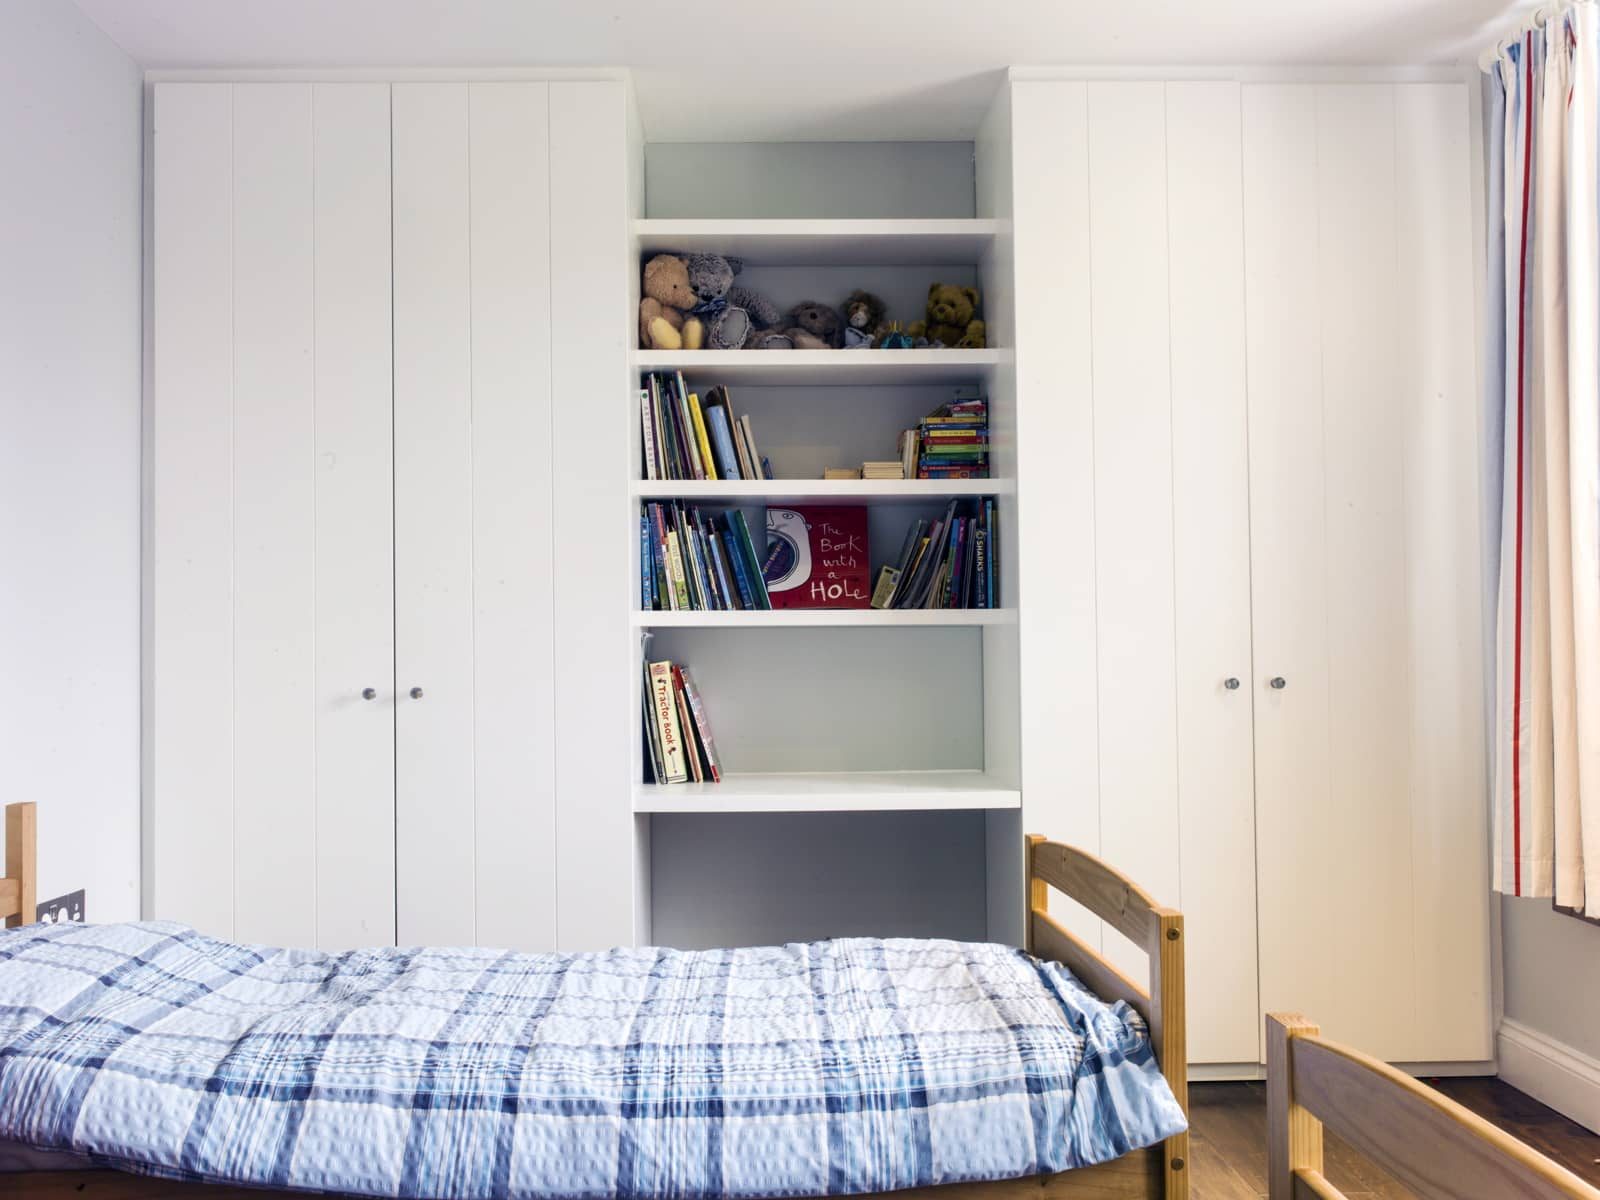 White wardrobes in child's bedroom